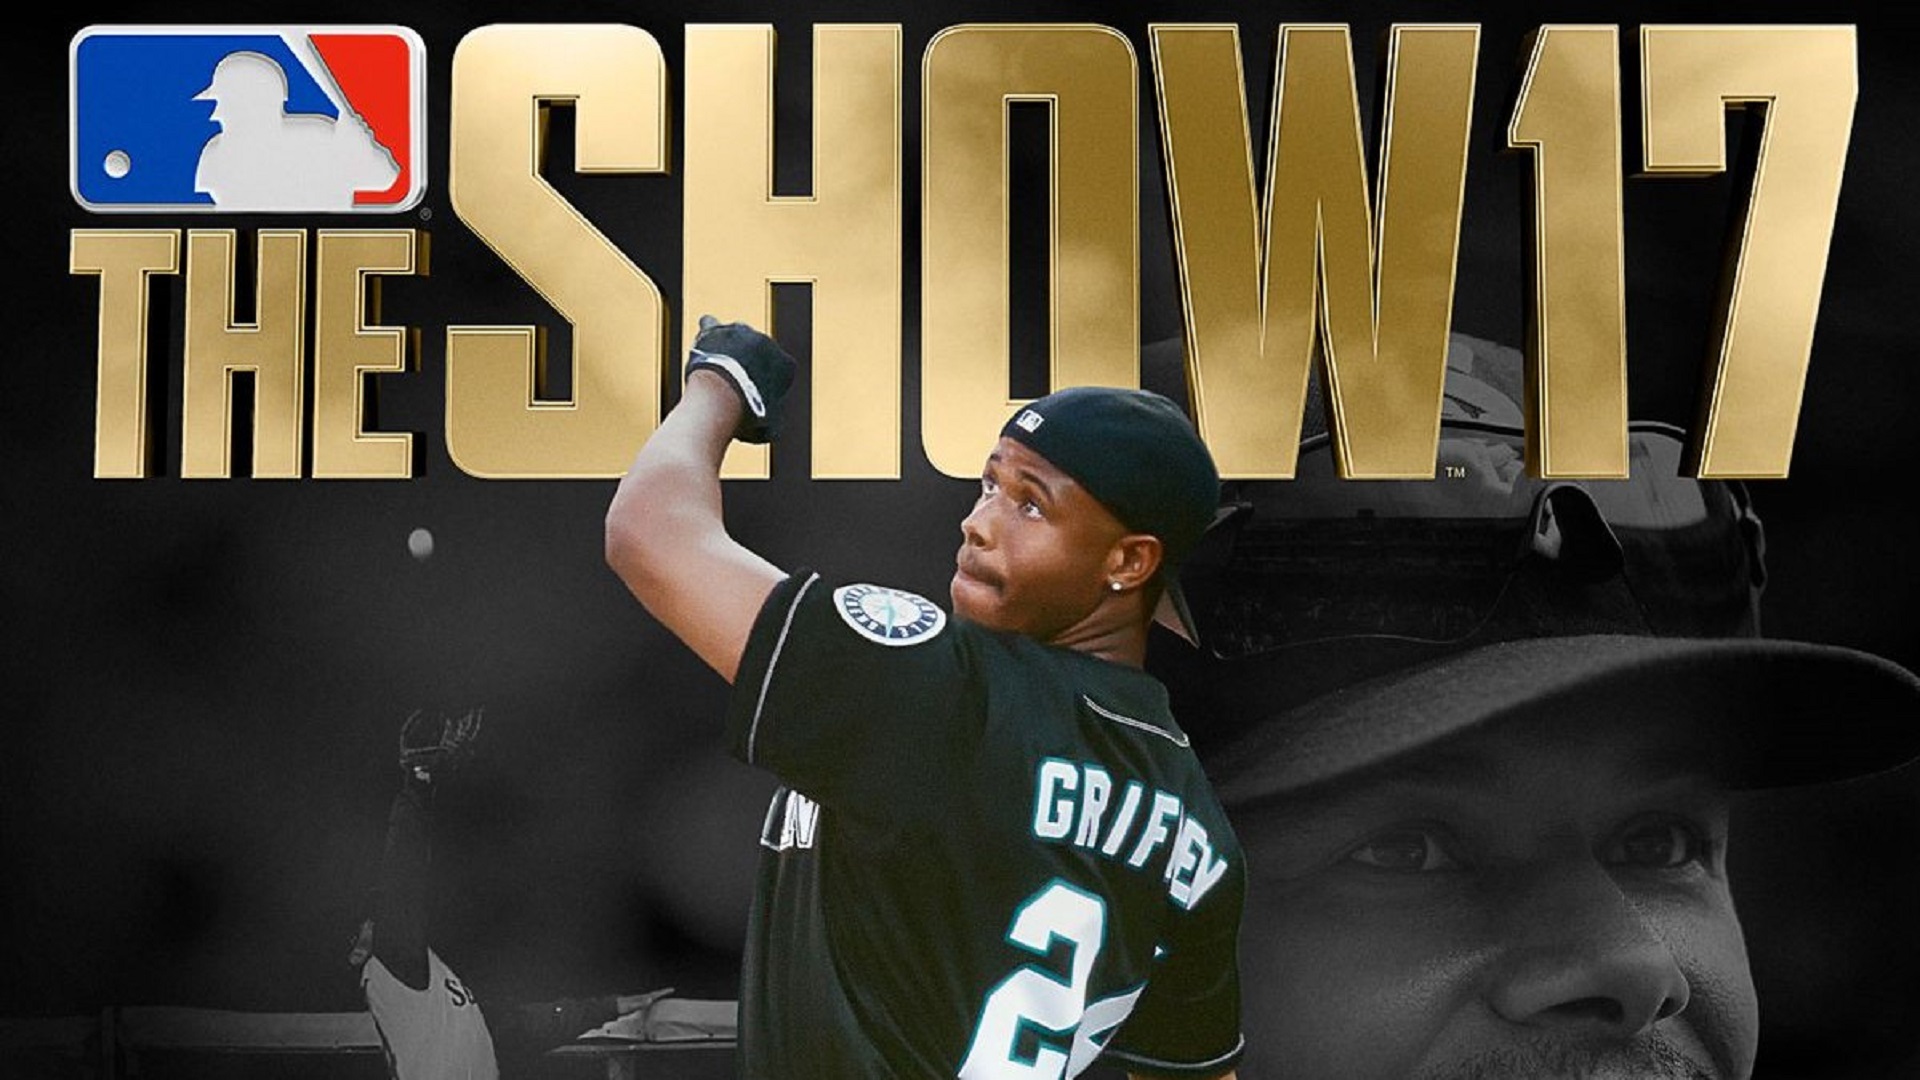 MLB The Show 2017 box art